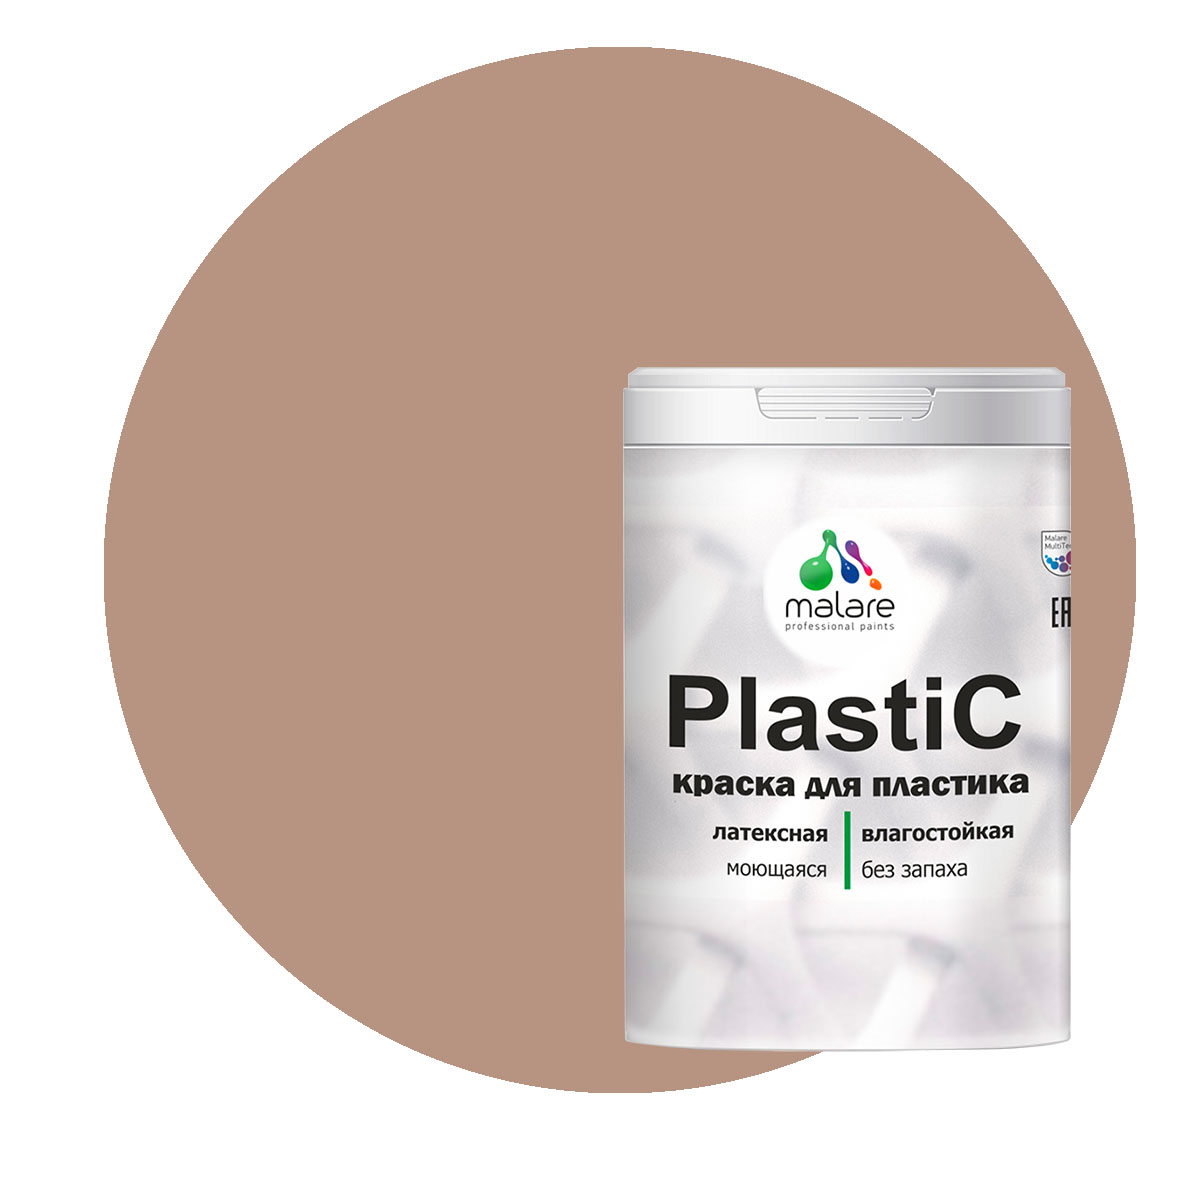 Краска Malare PlastiC для пластика, ПВХ, для сайдинга, античная латунь, 1 кг. краска malare plastic для пластика пвх для сайдинга античная латунь 2 кг